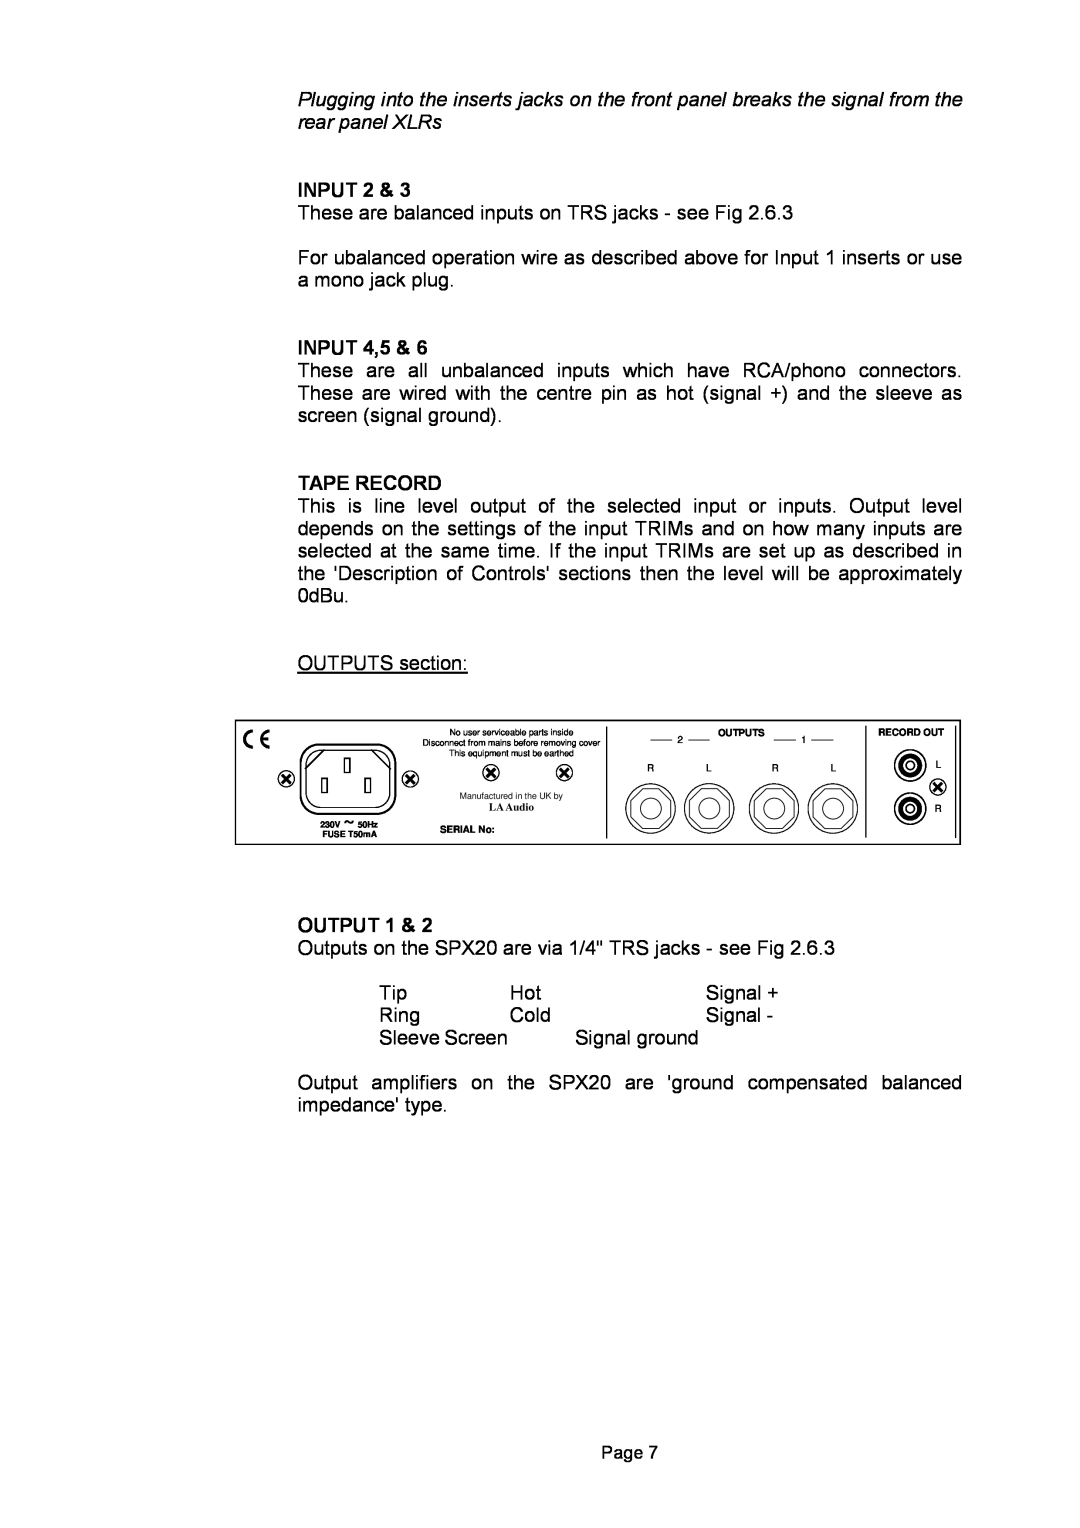 LA Audio Electronic SPX20 operation manual Input, INPUT 4,5, Tape Record, Output 